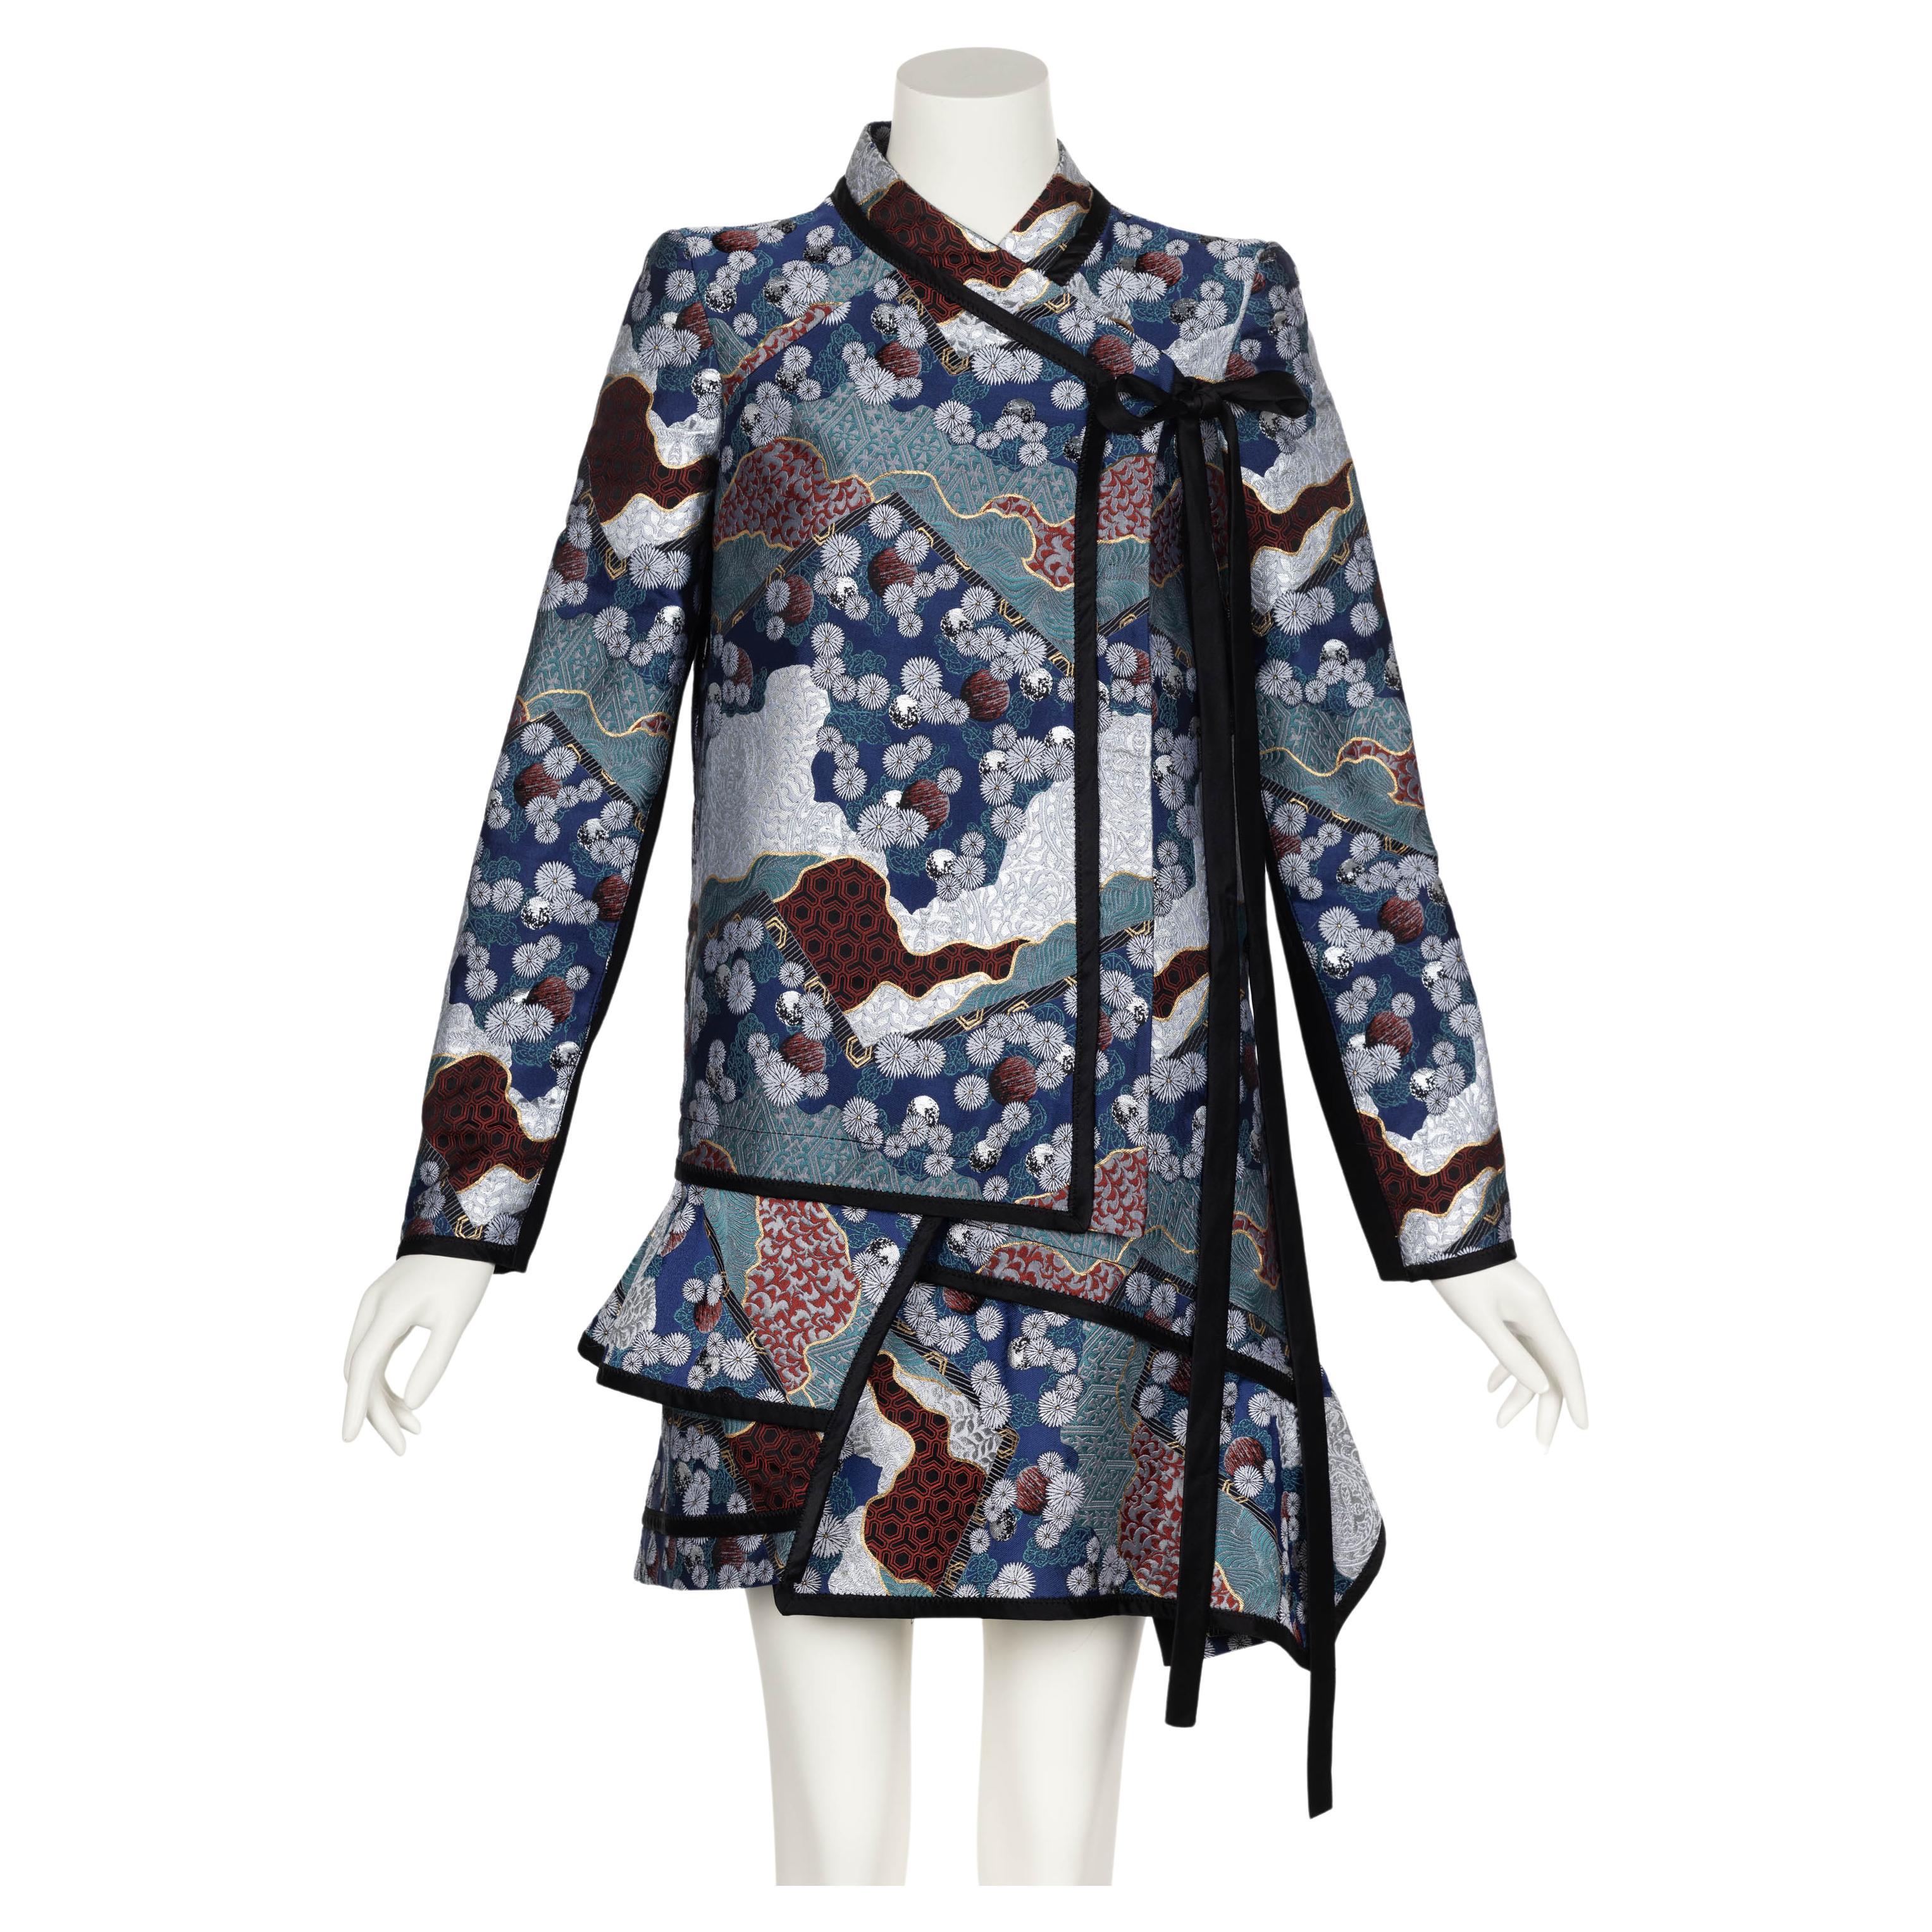 Proenza Schouler Fall 2012 Brocade Dress / Coat For Sale